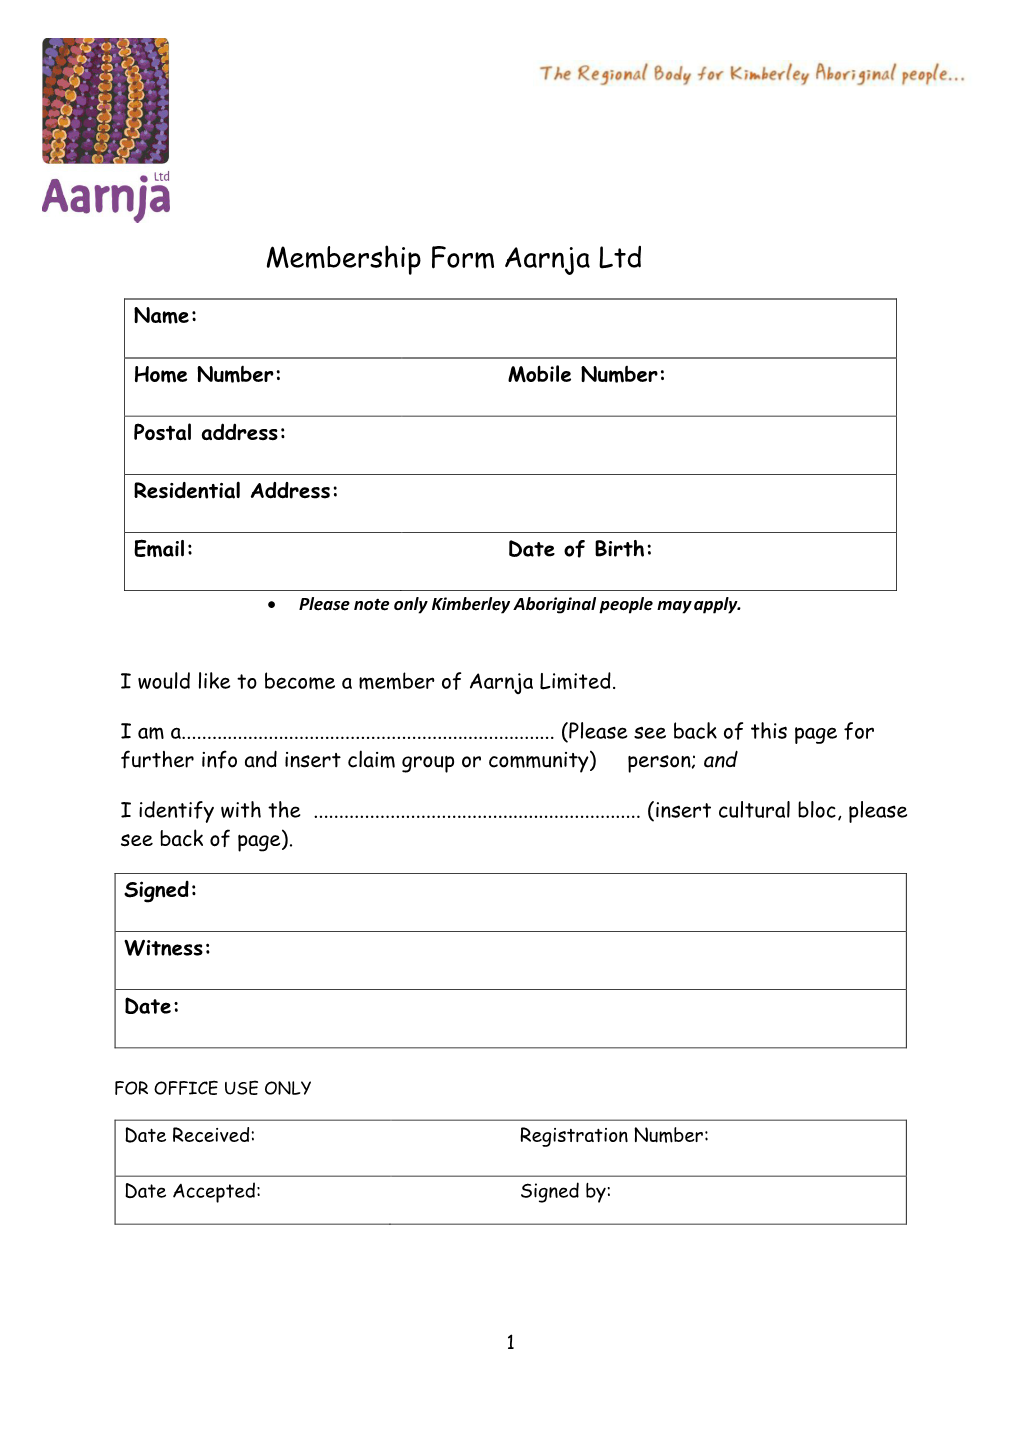 Membership Form Aarnja Ltd